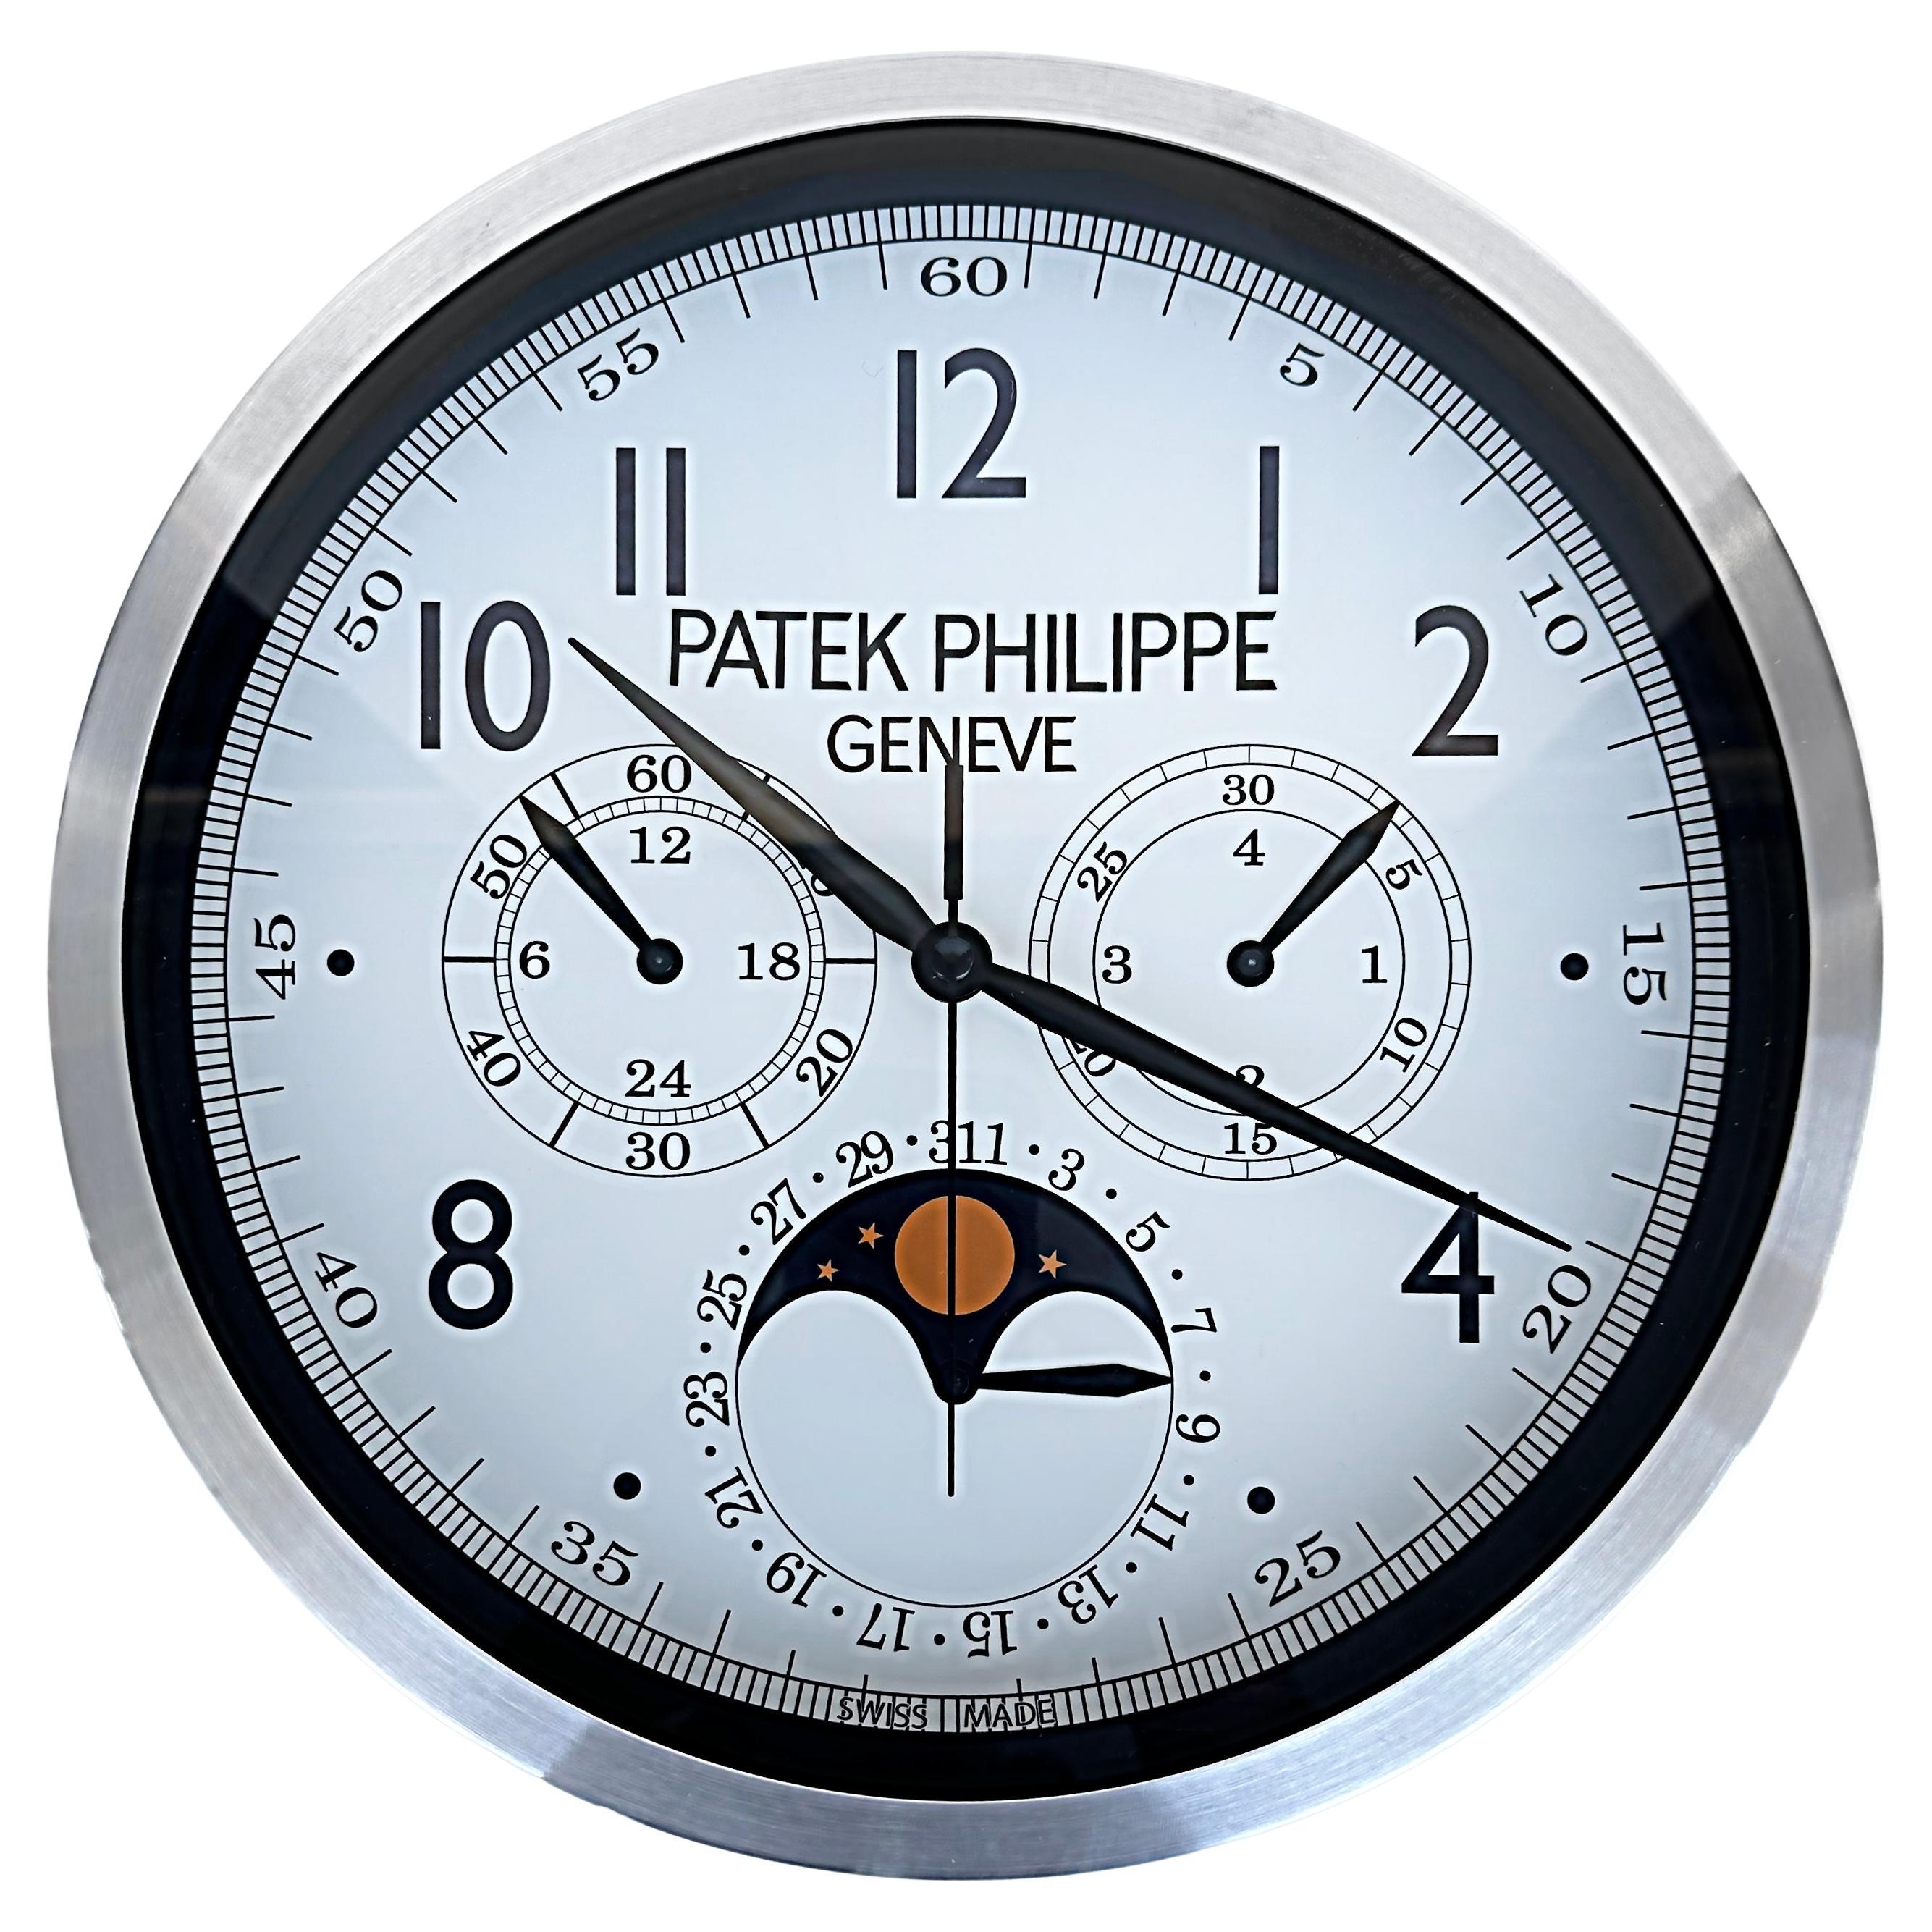 Patek Philippe, Switzerland Dealer's Advertising Wall Clock